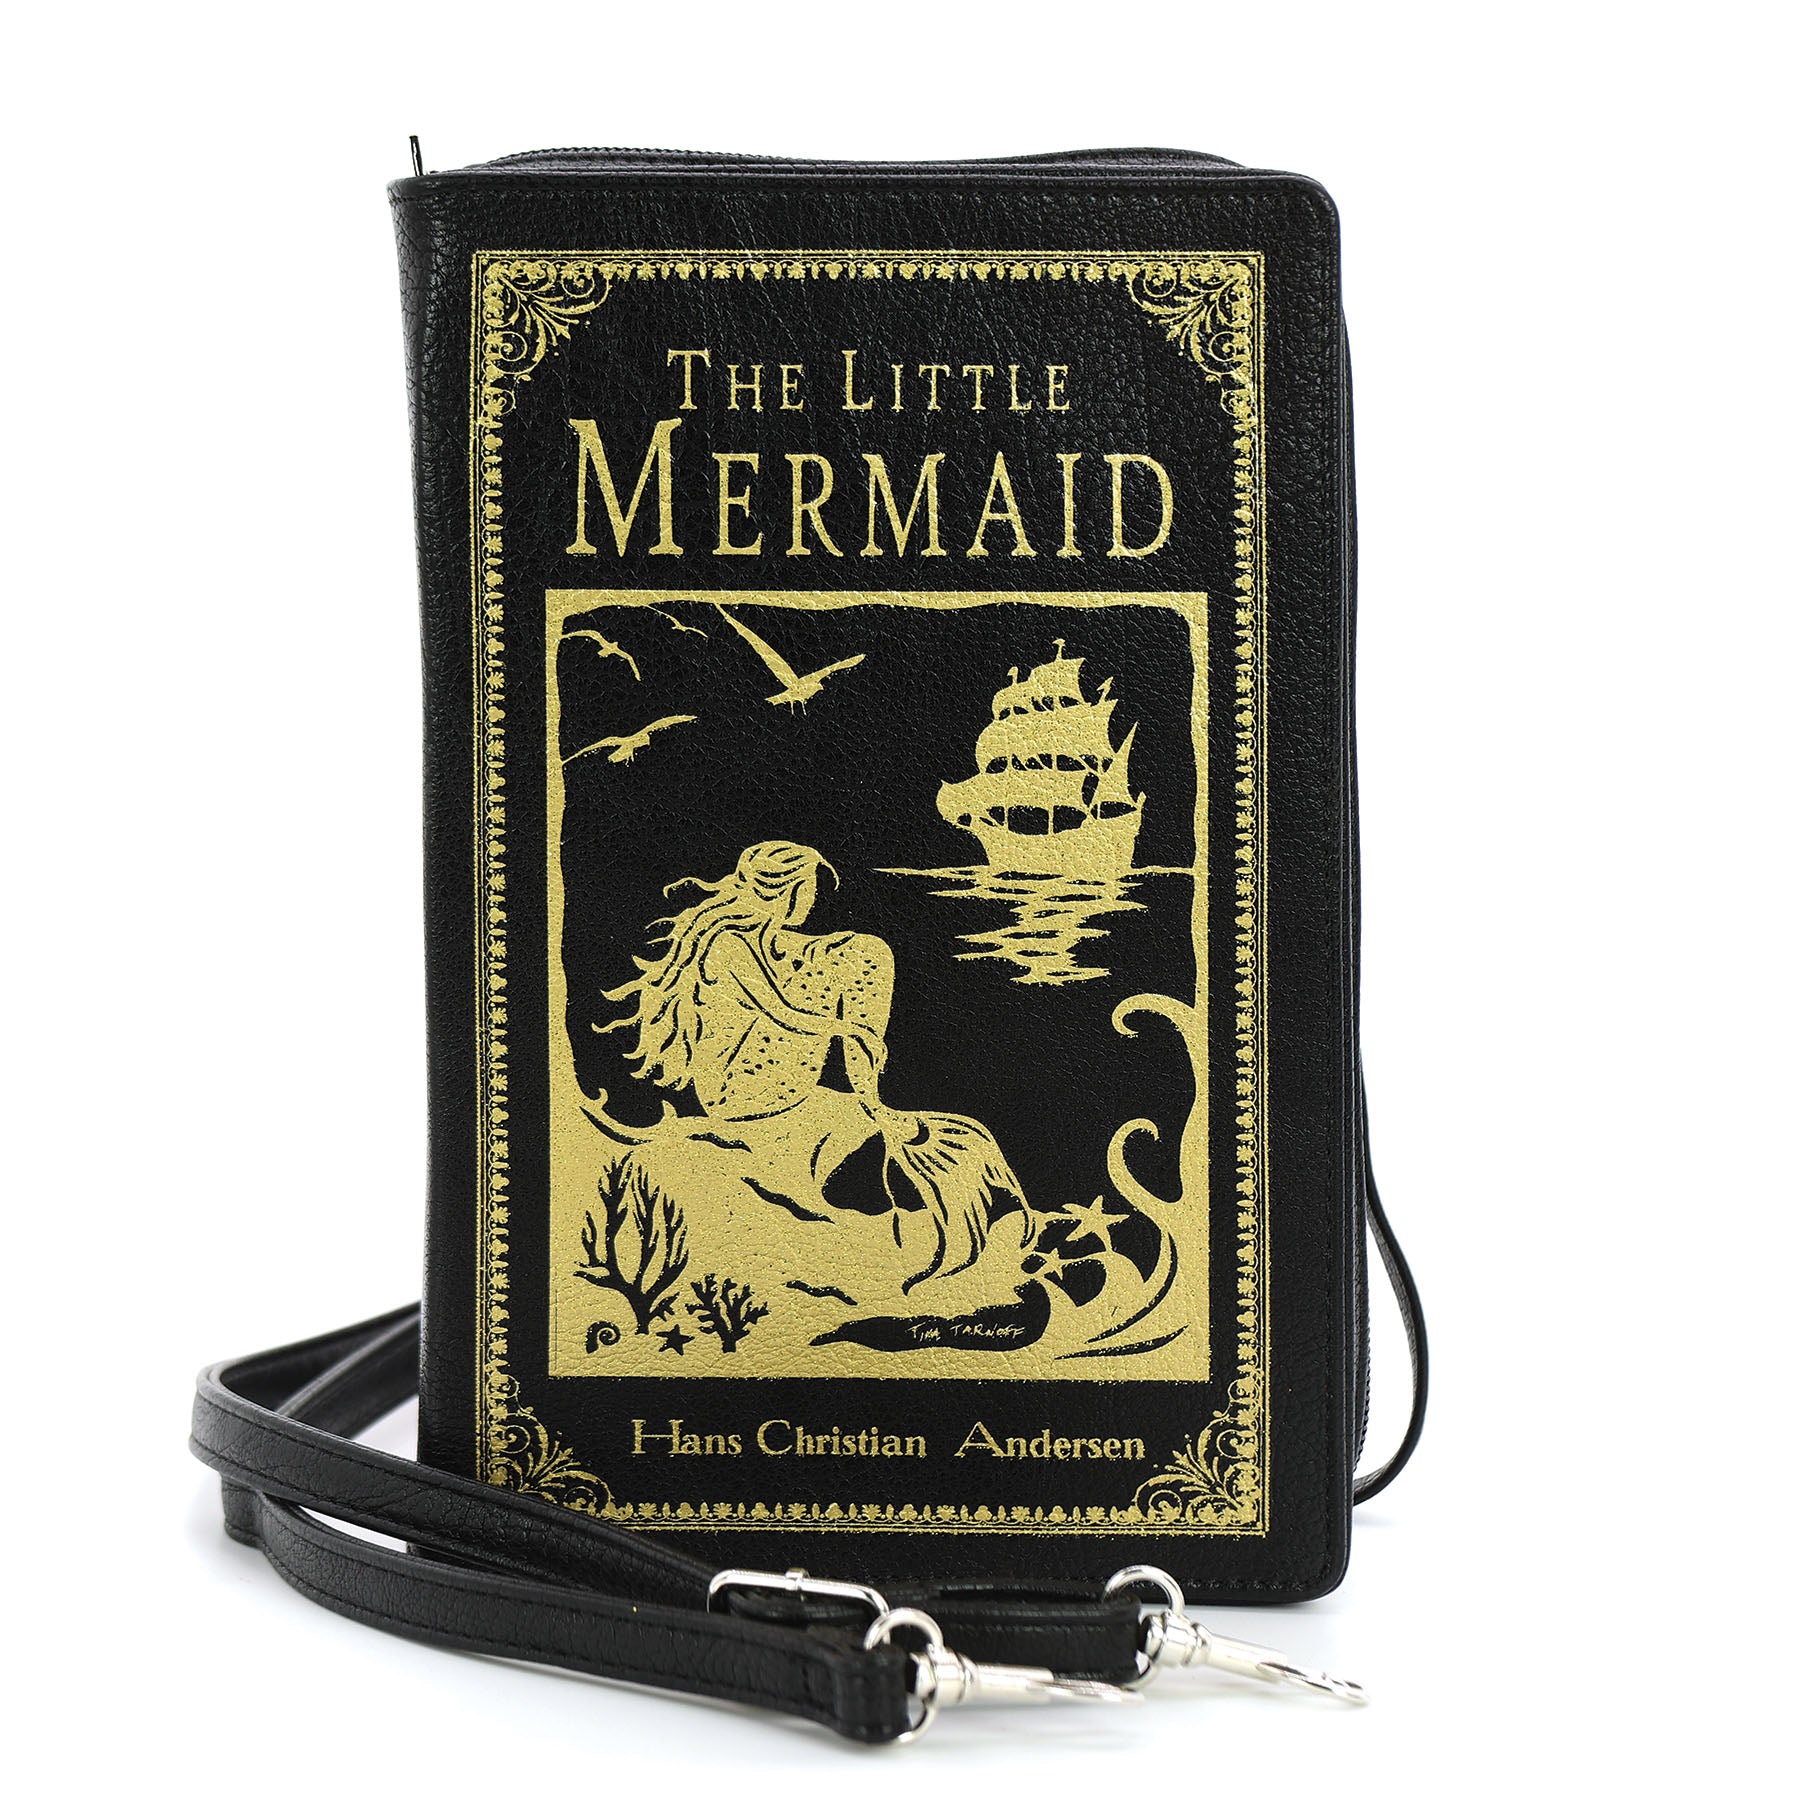 The Little Mermaid Book Clutch Bag in Vinyl